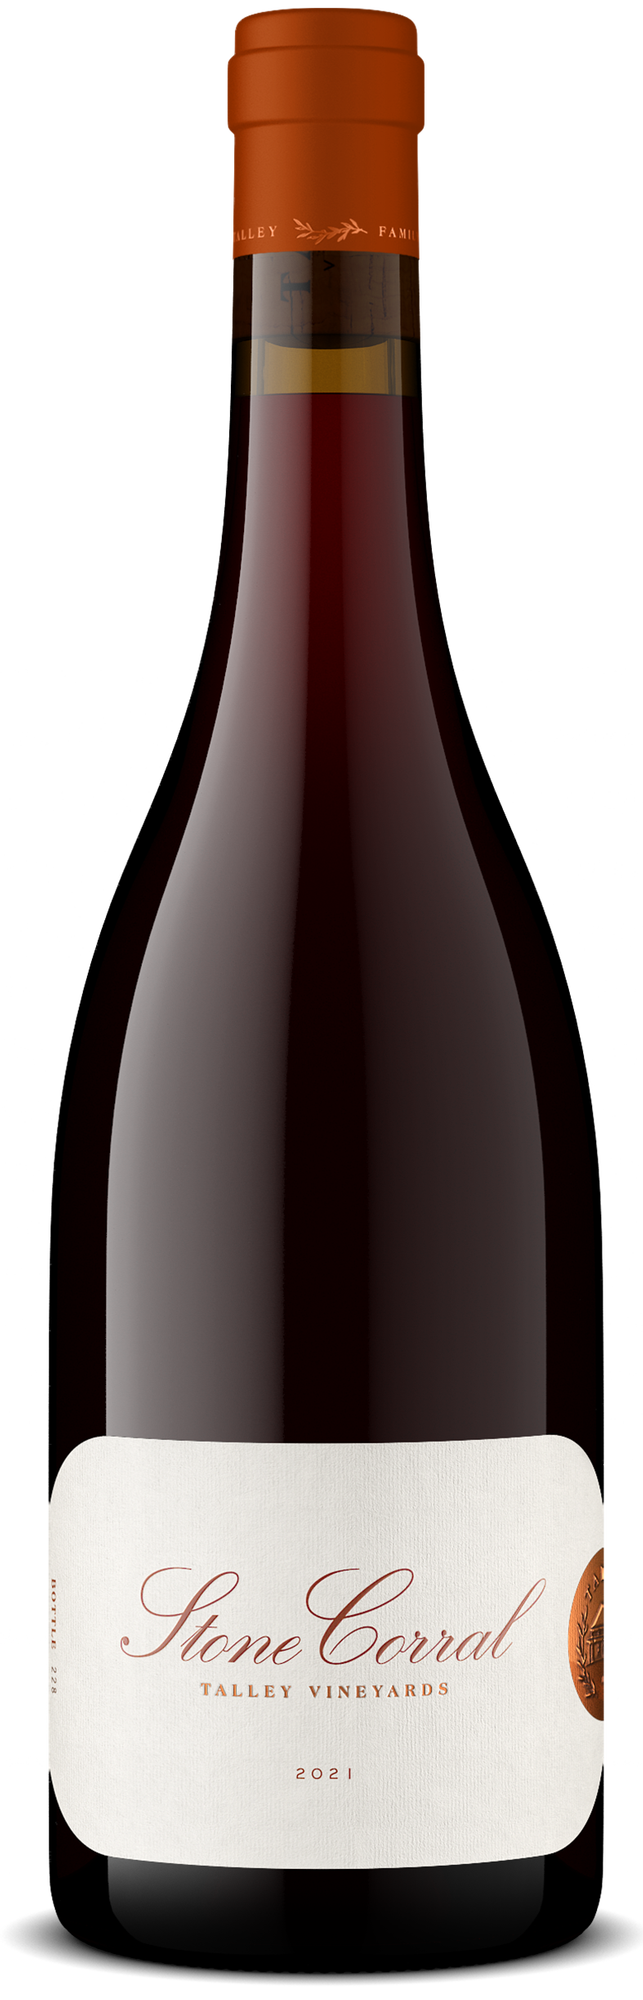 2021 Stone Corral Pinot Noir